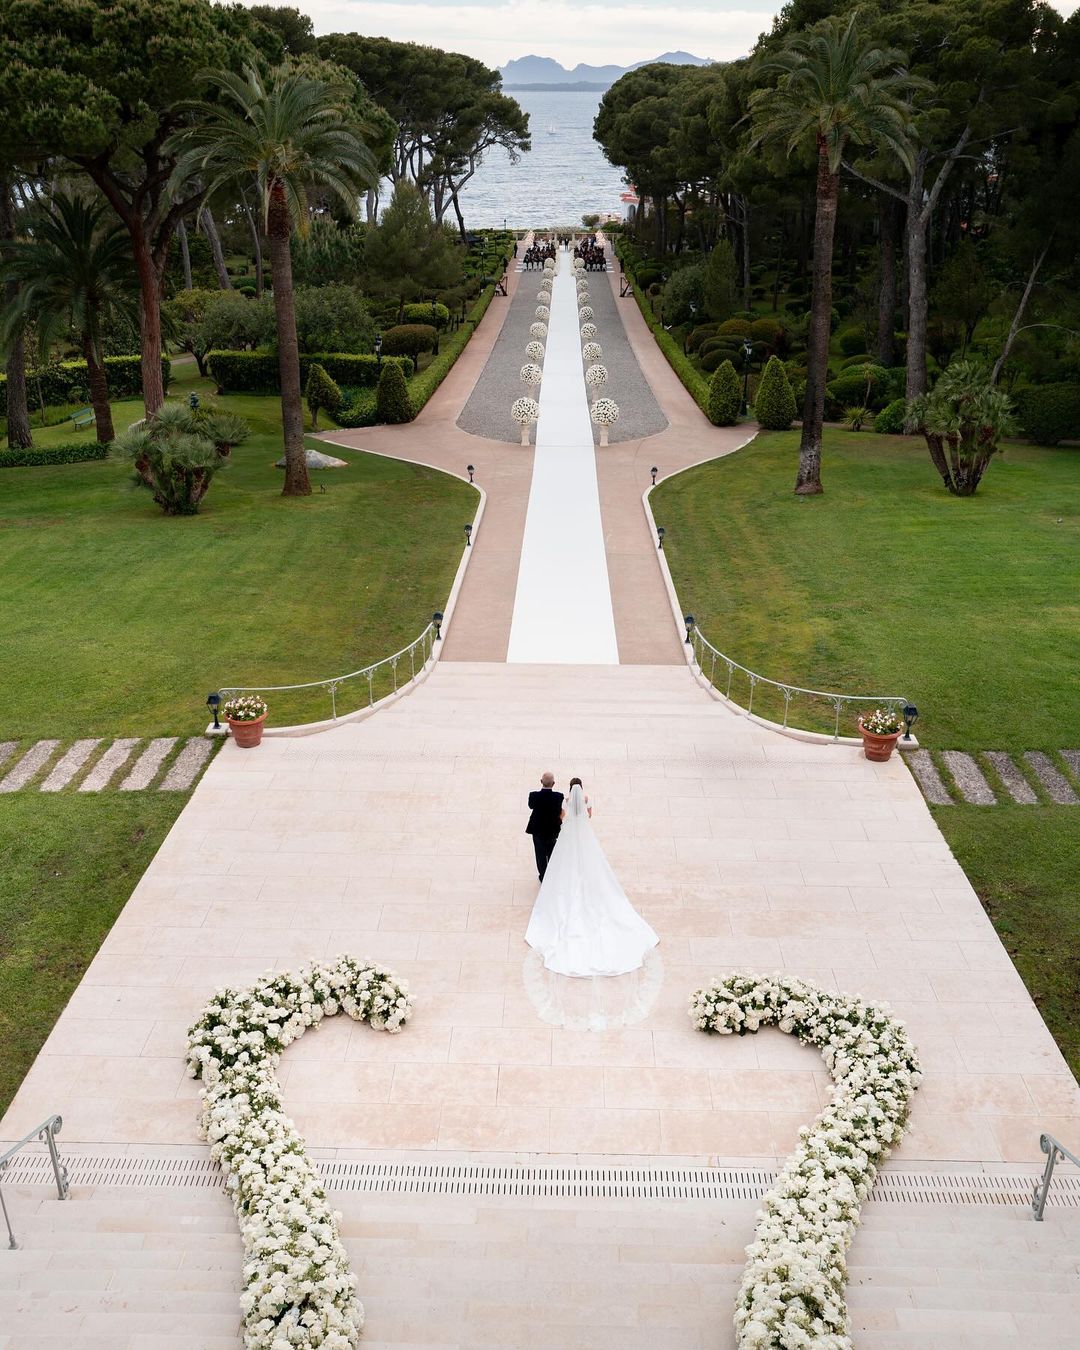 Raskošno venčanje na jugu Francuske: Hotel du Cap-Eden-Roc je omiljena wedding destinacija